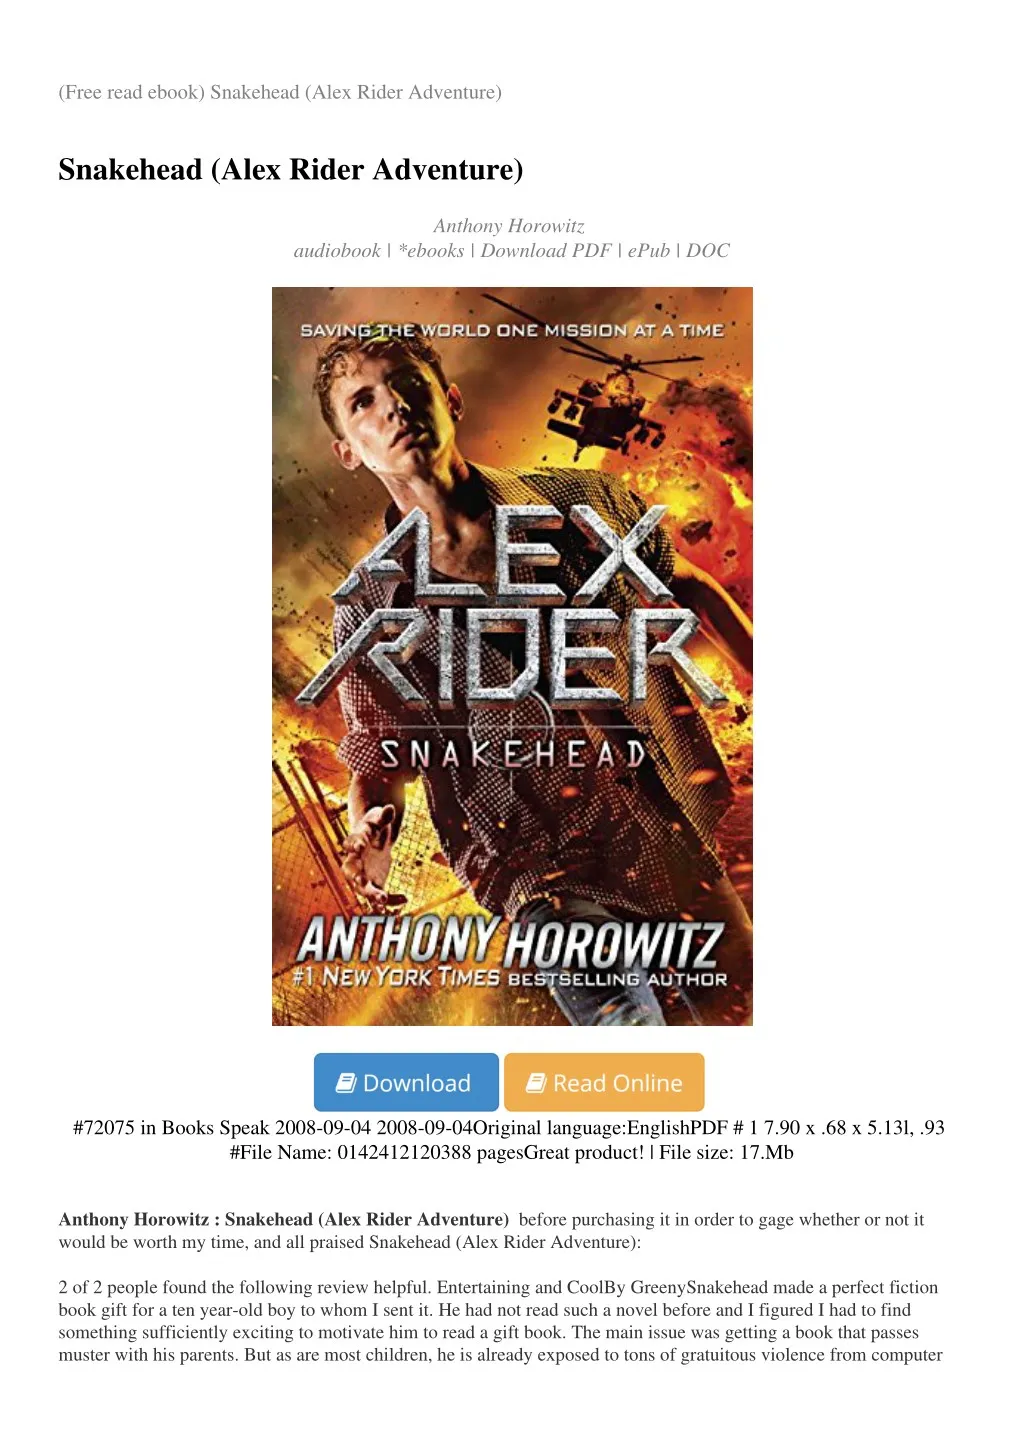 free read ebook snakehead alex rider adventure